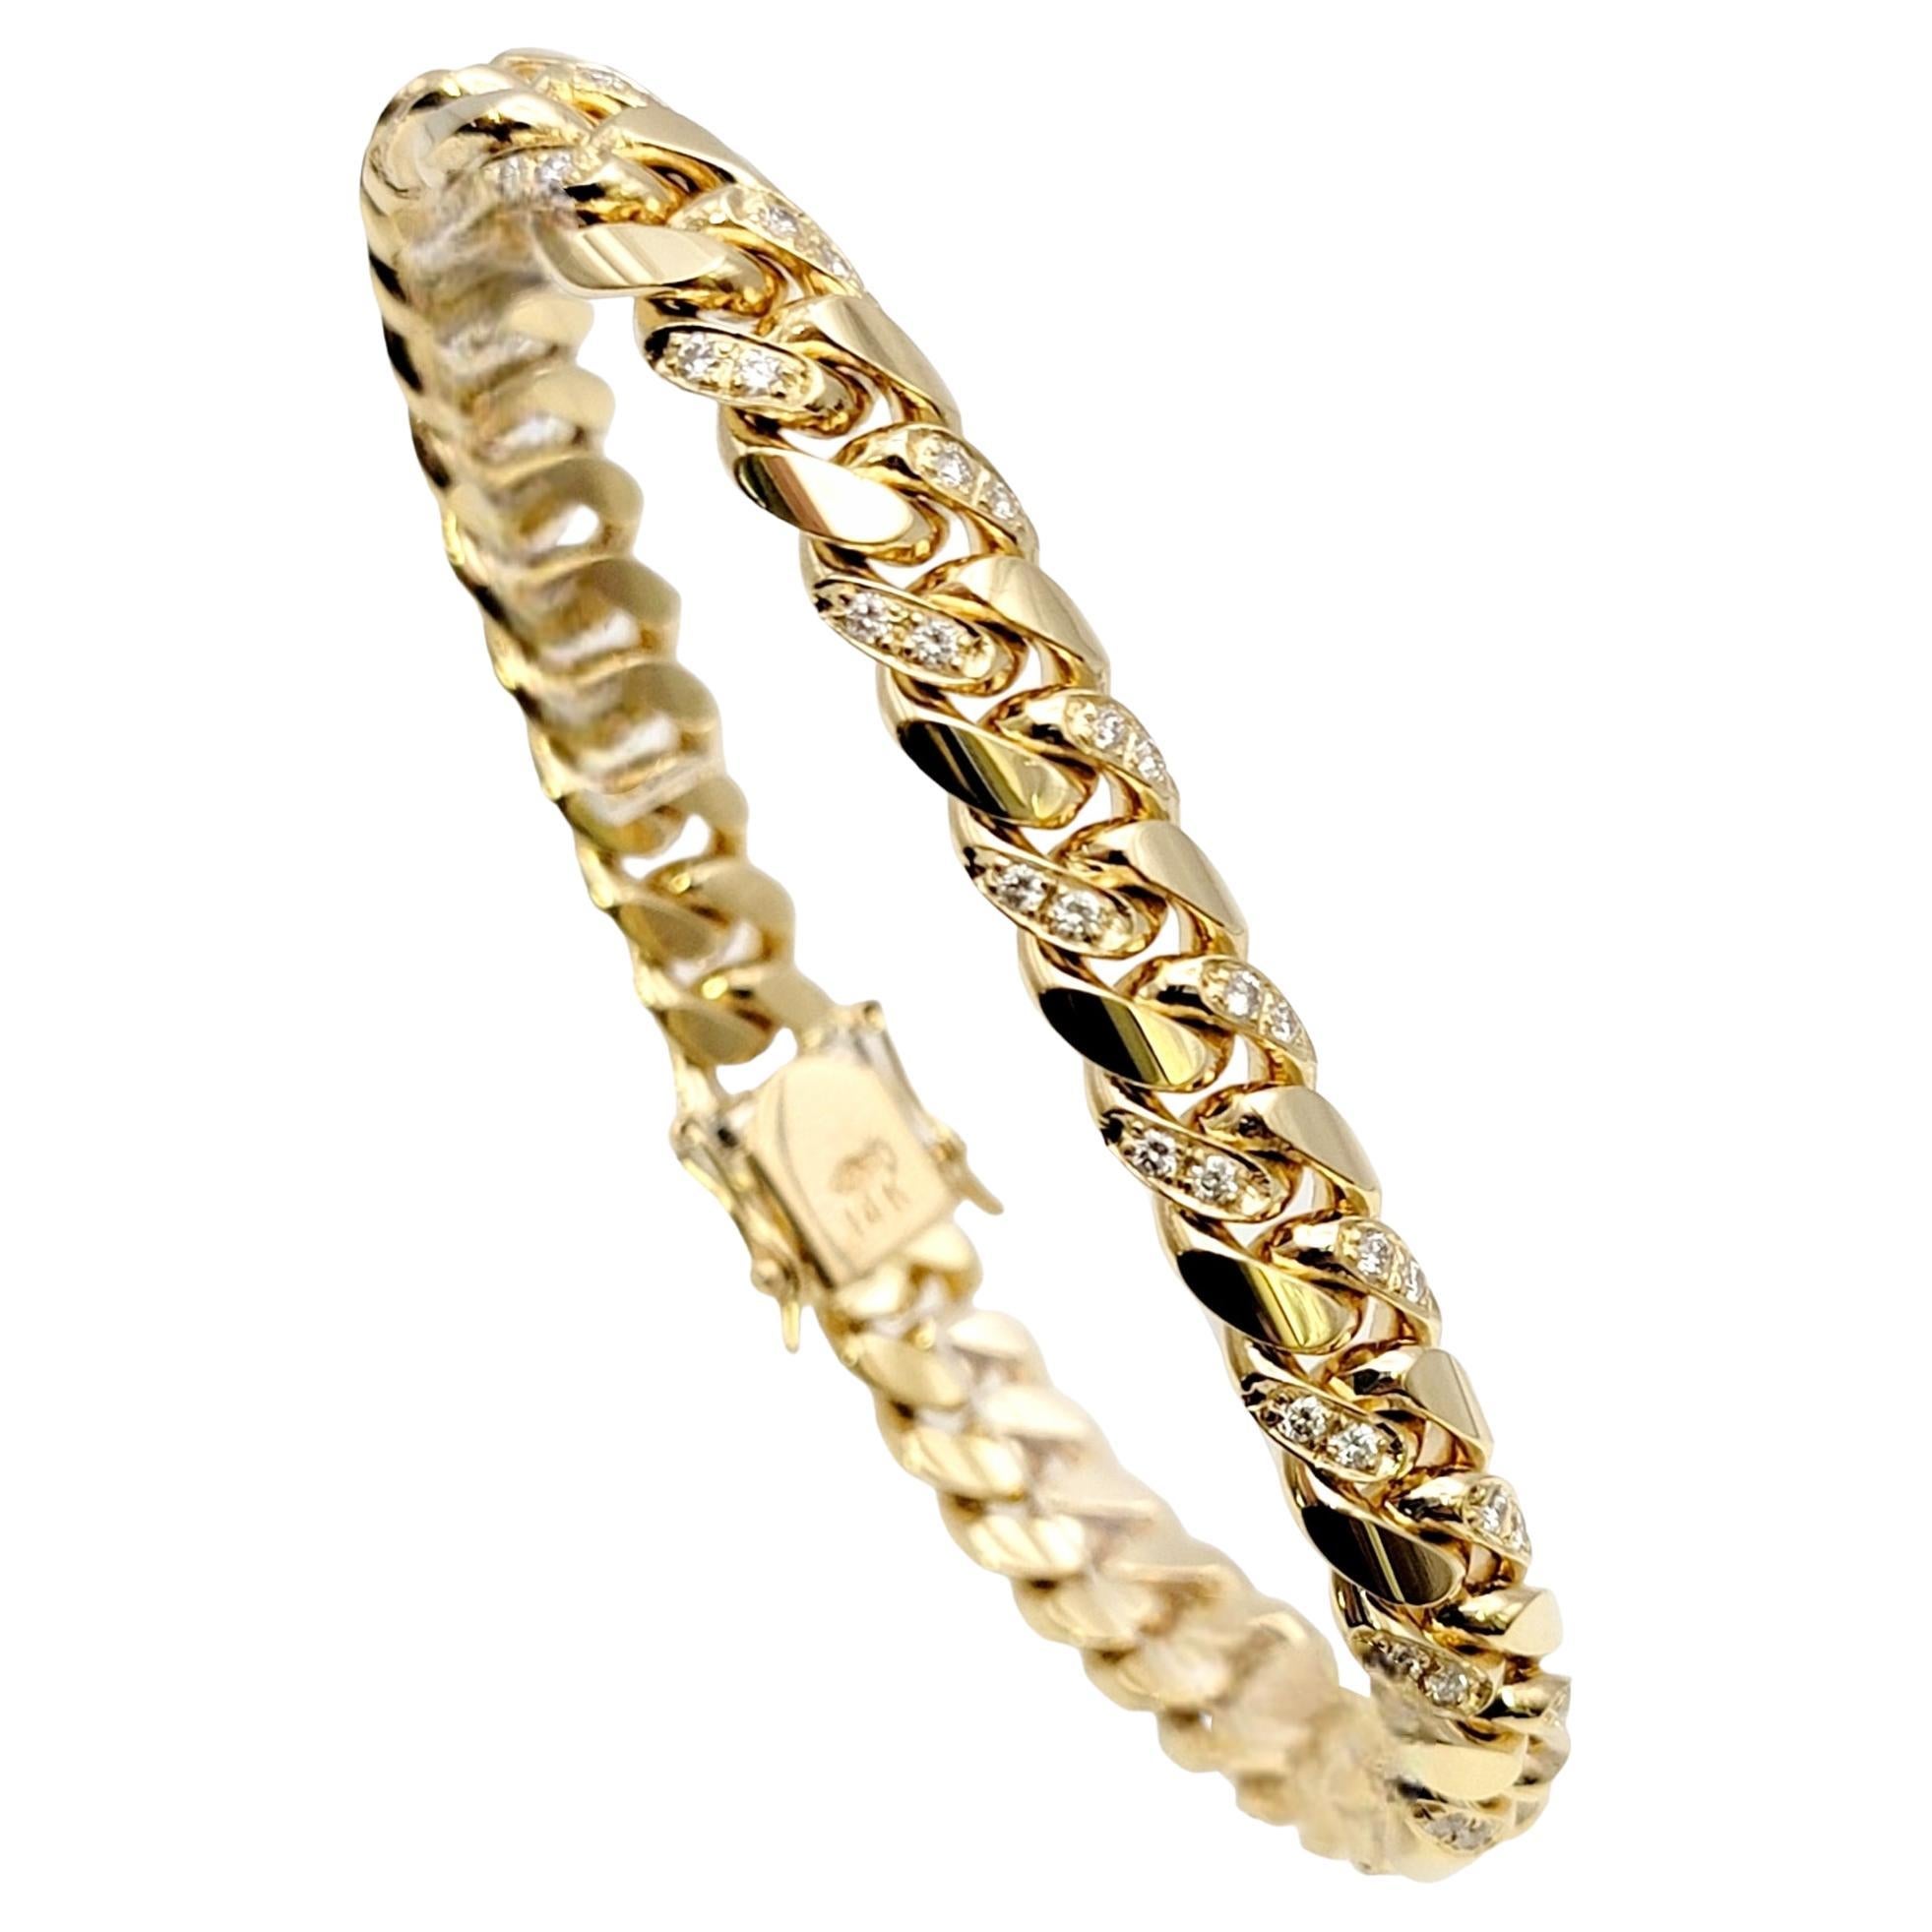 Unisex 14 Karat Yellow Gold Curb Link Bracelet with Pave Diamond Accents